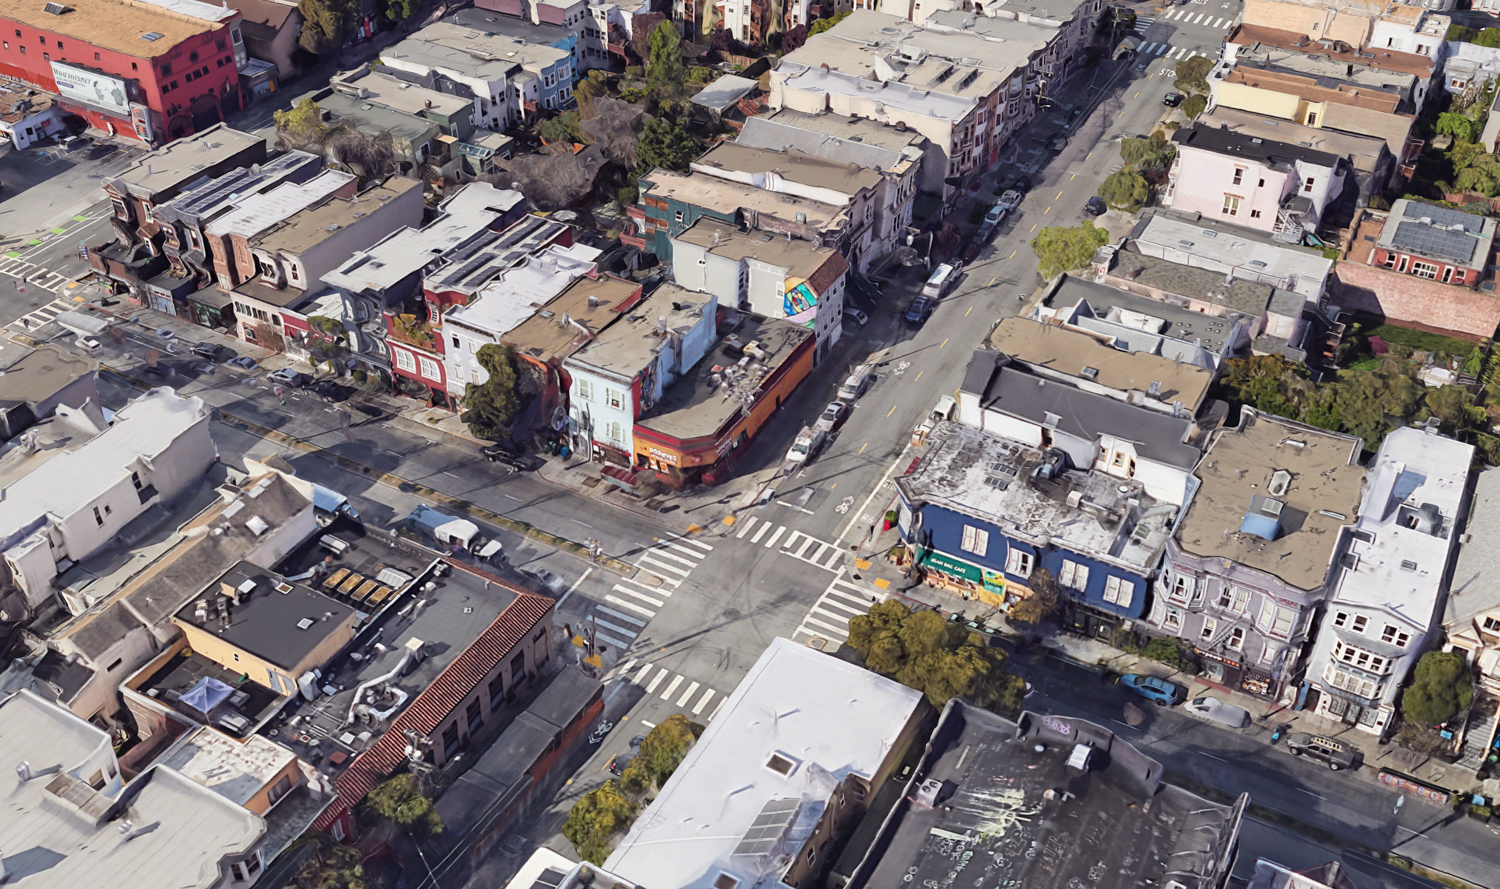 599 Divisadero Street, image via Google Satellite